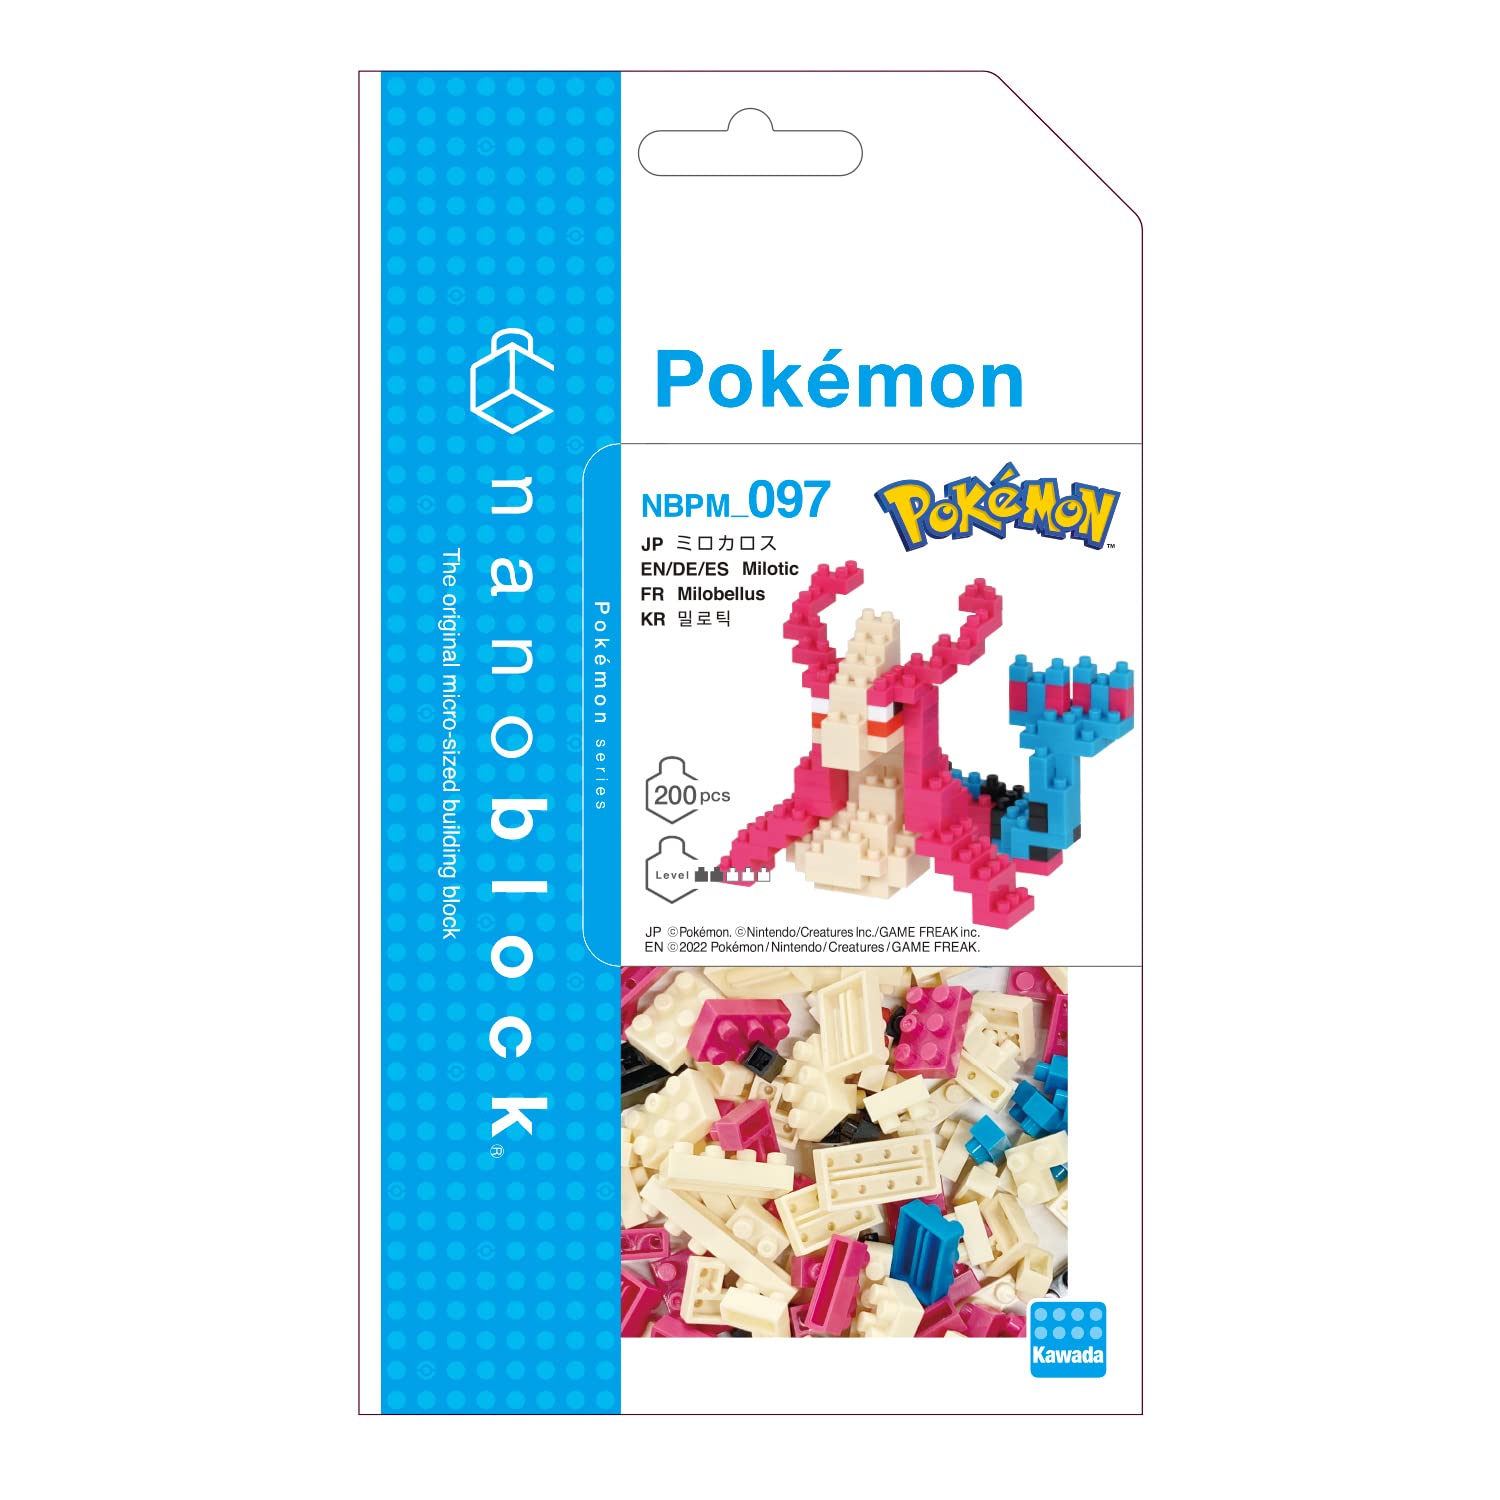 nanoblock - Pokémon - Milotic, Pokémon Series Building Kit